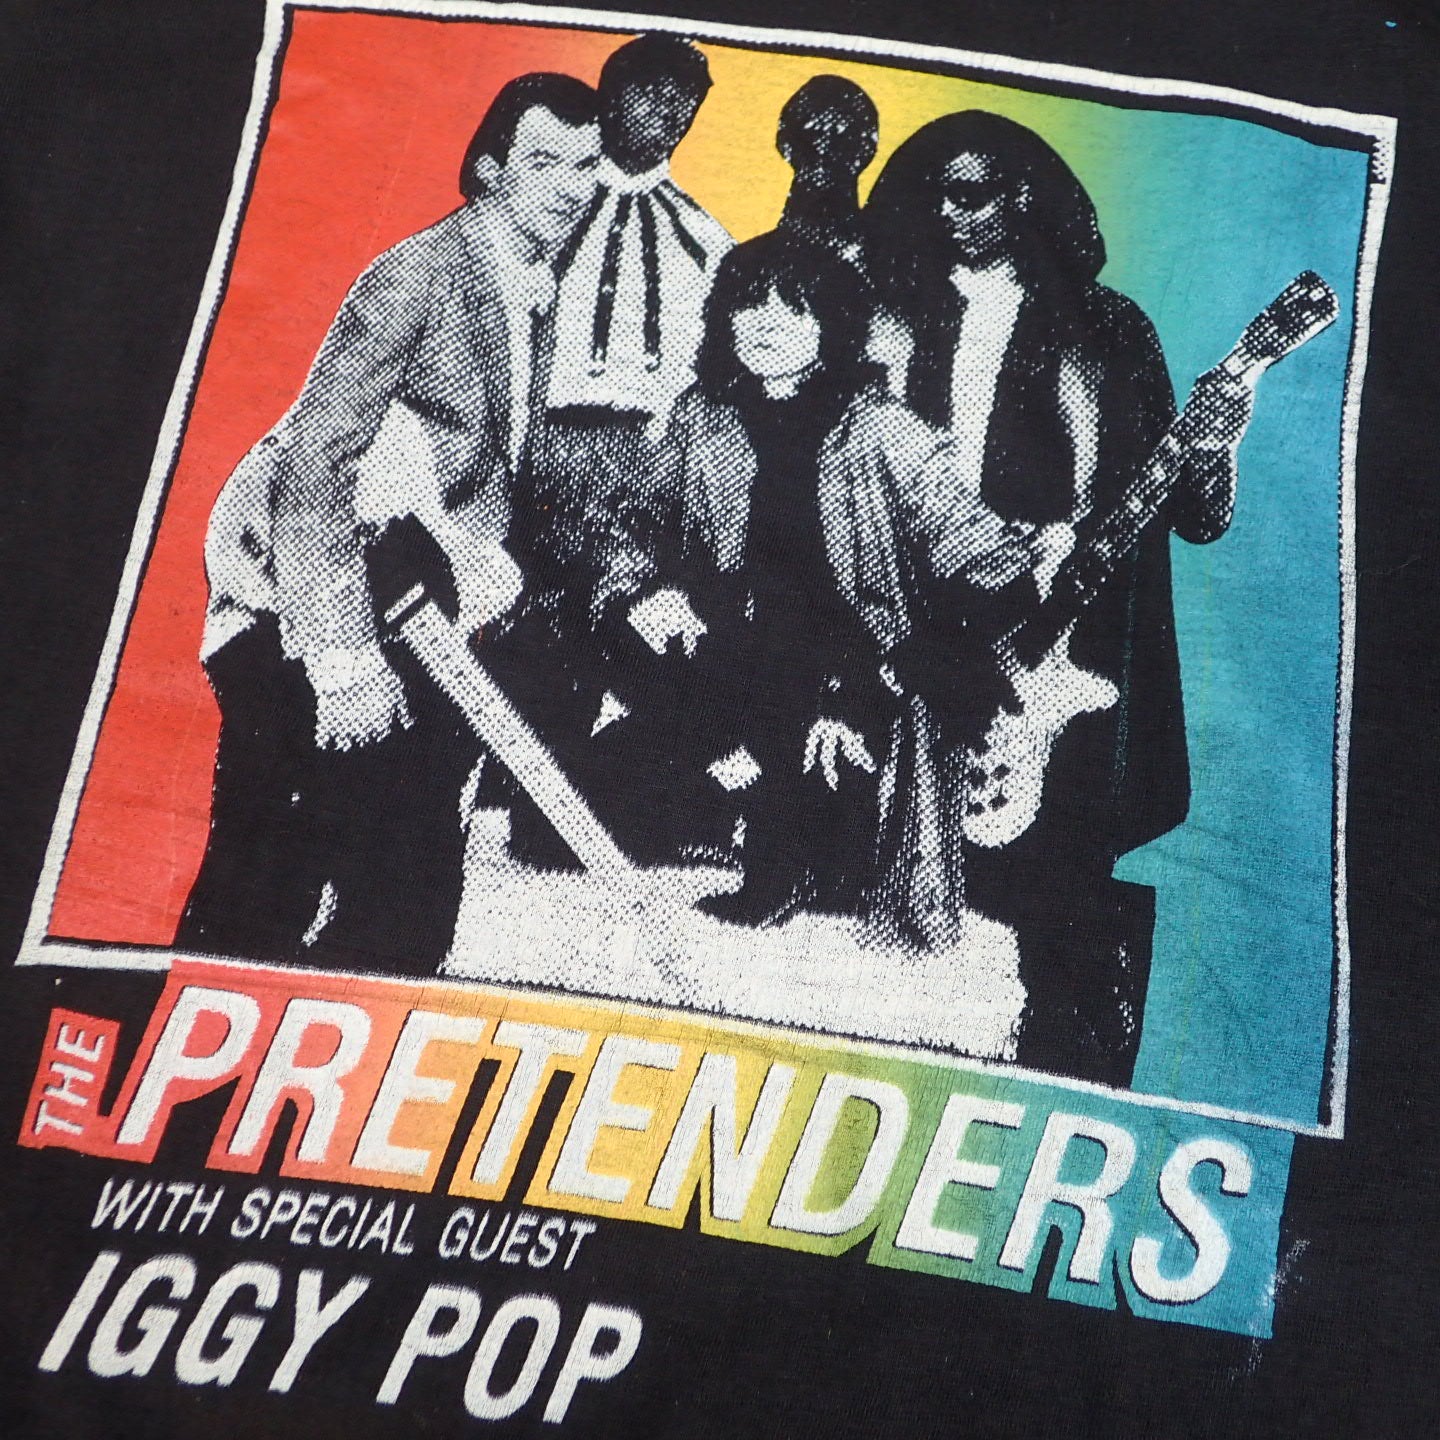 80s The Pretenders T-shirt "Get Close Tee"